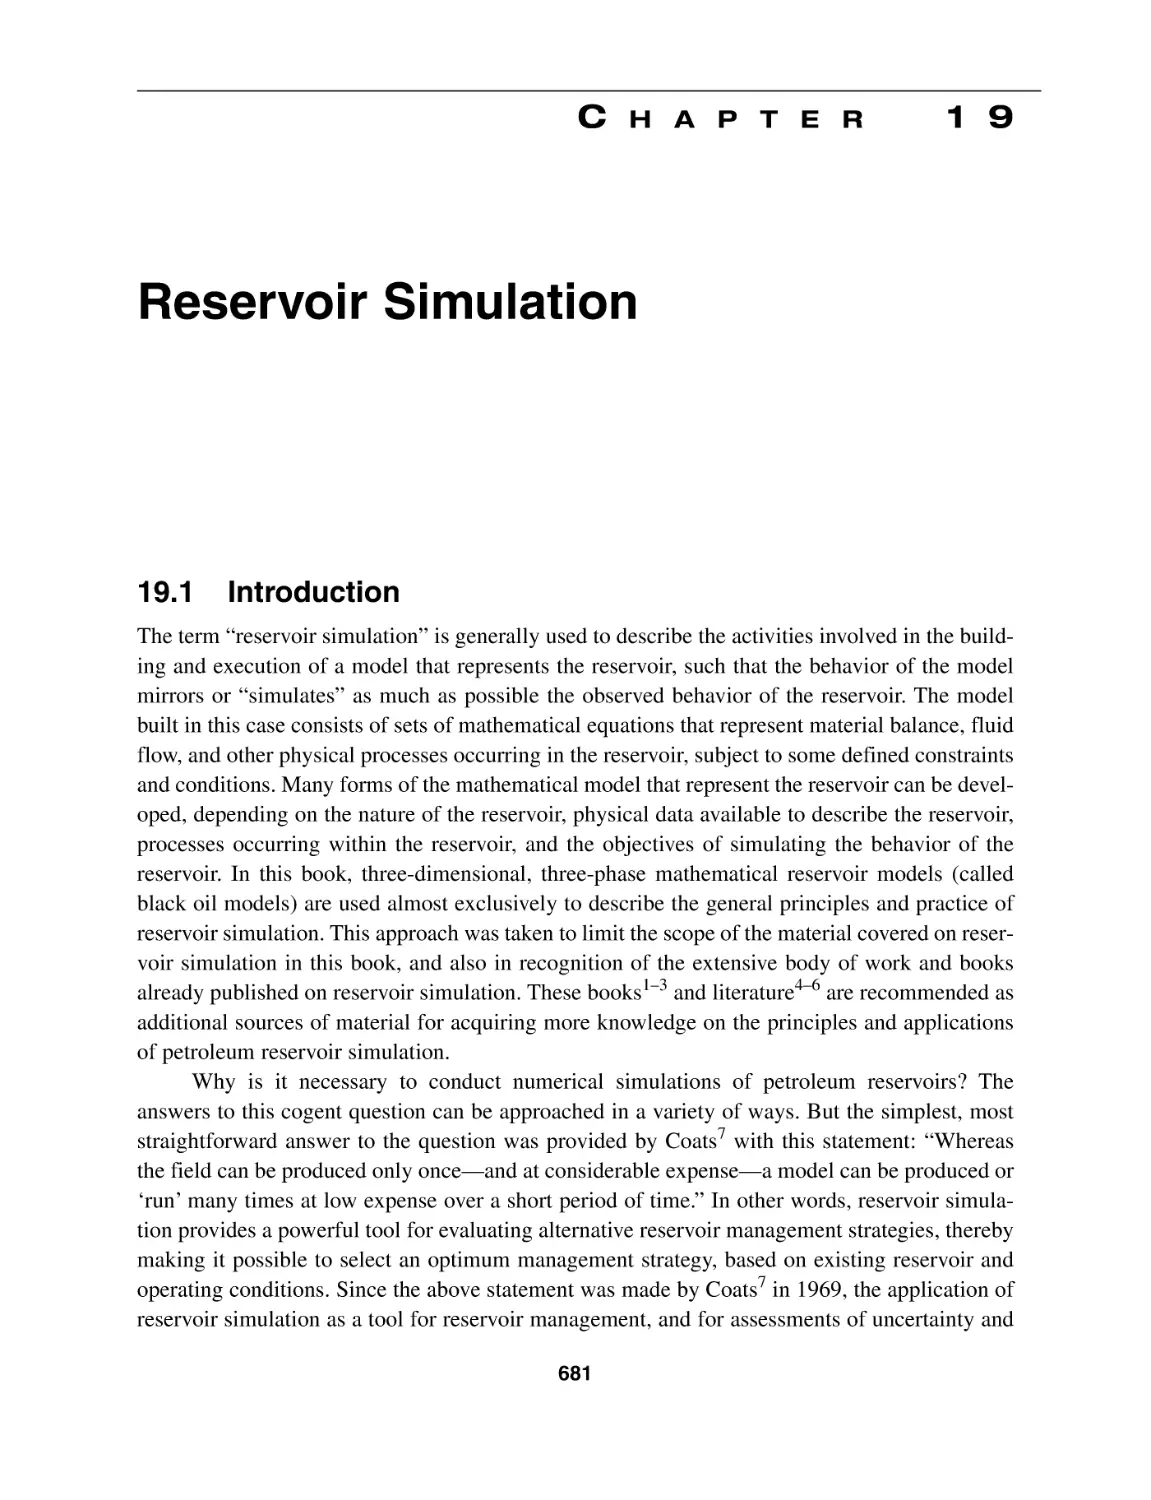 Chapter 19 Reservoir Simulation
19.1 Introduction